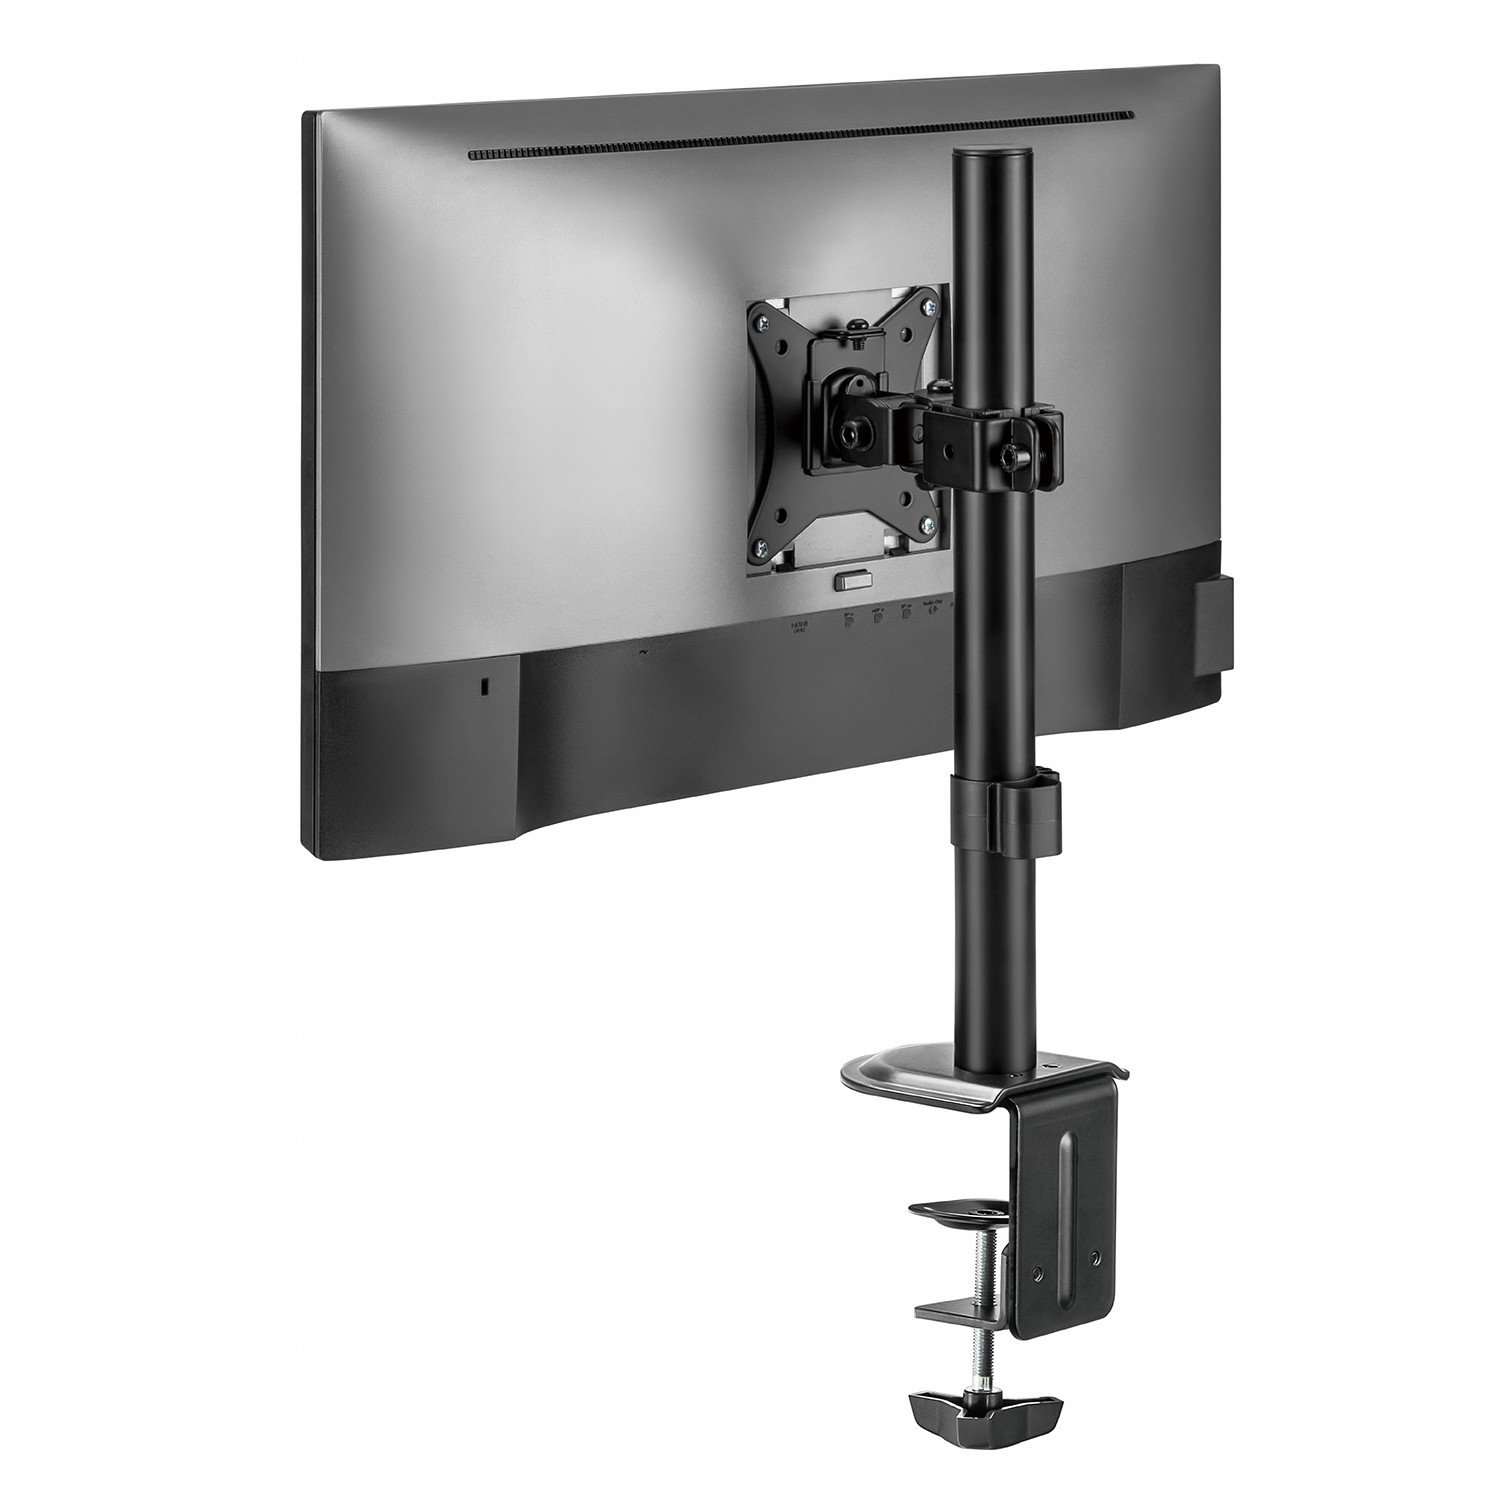 Biurový Držák Pro LCD Monitora 17-32'' Nosnost 9kg Vesa 75x75 100x100 mm